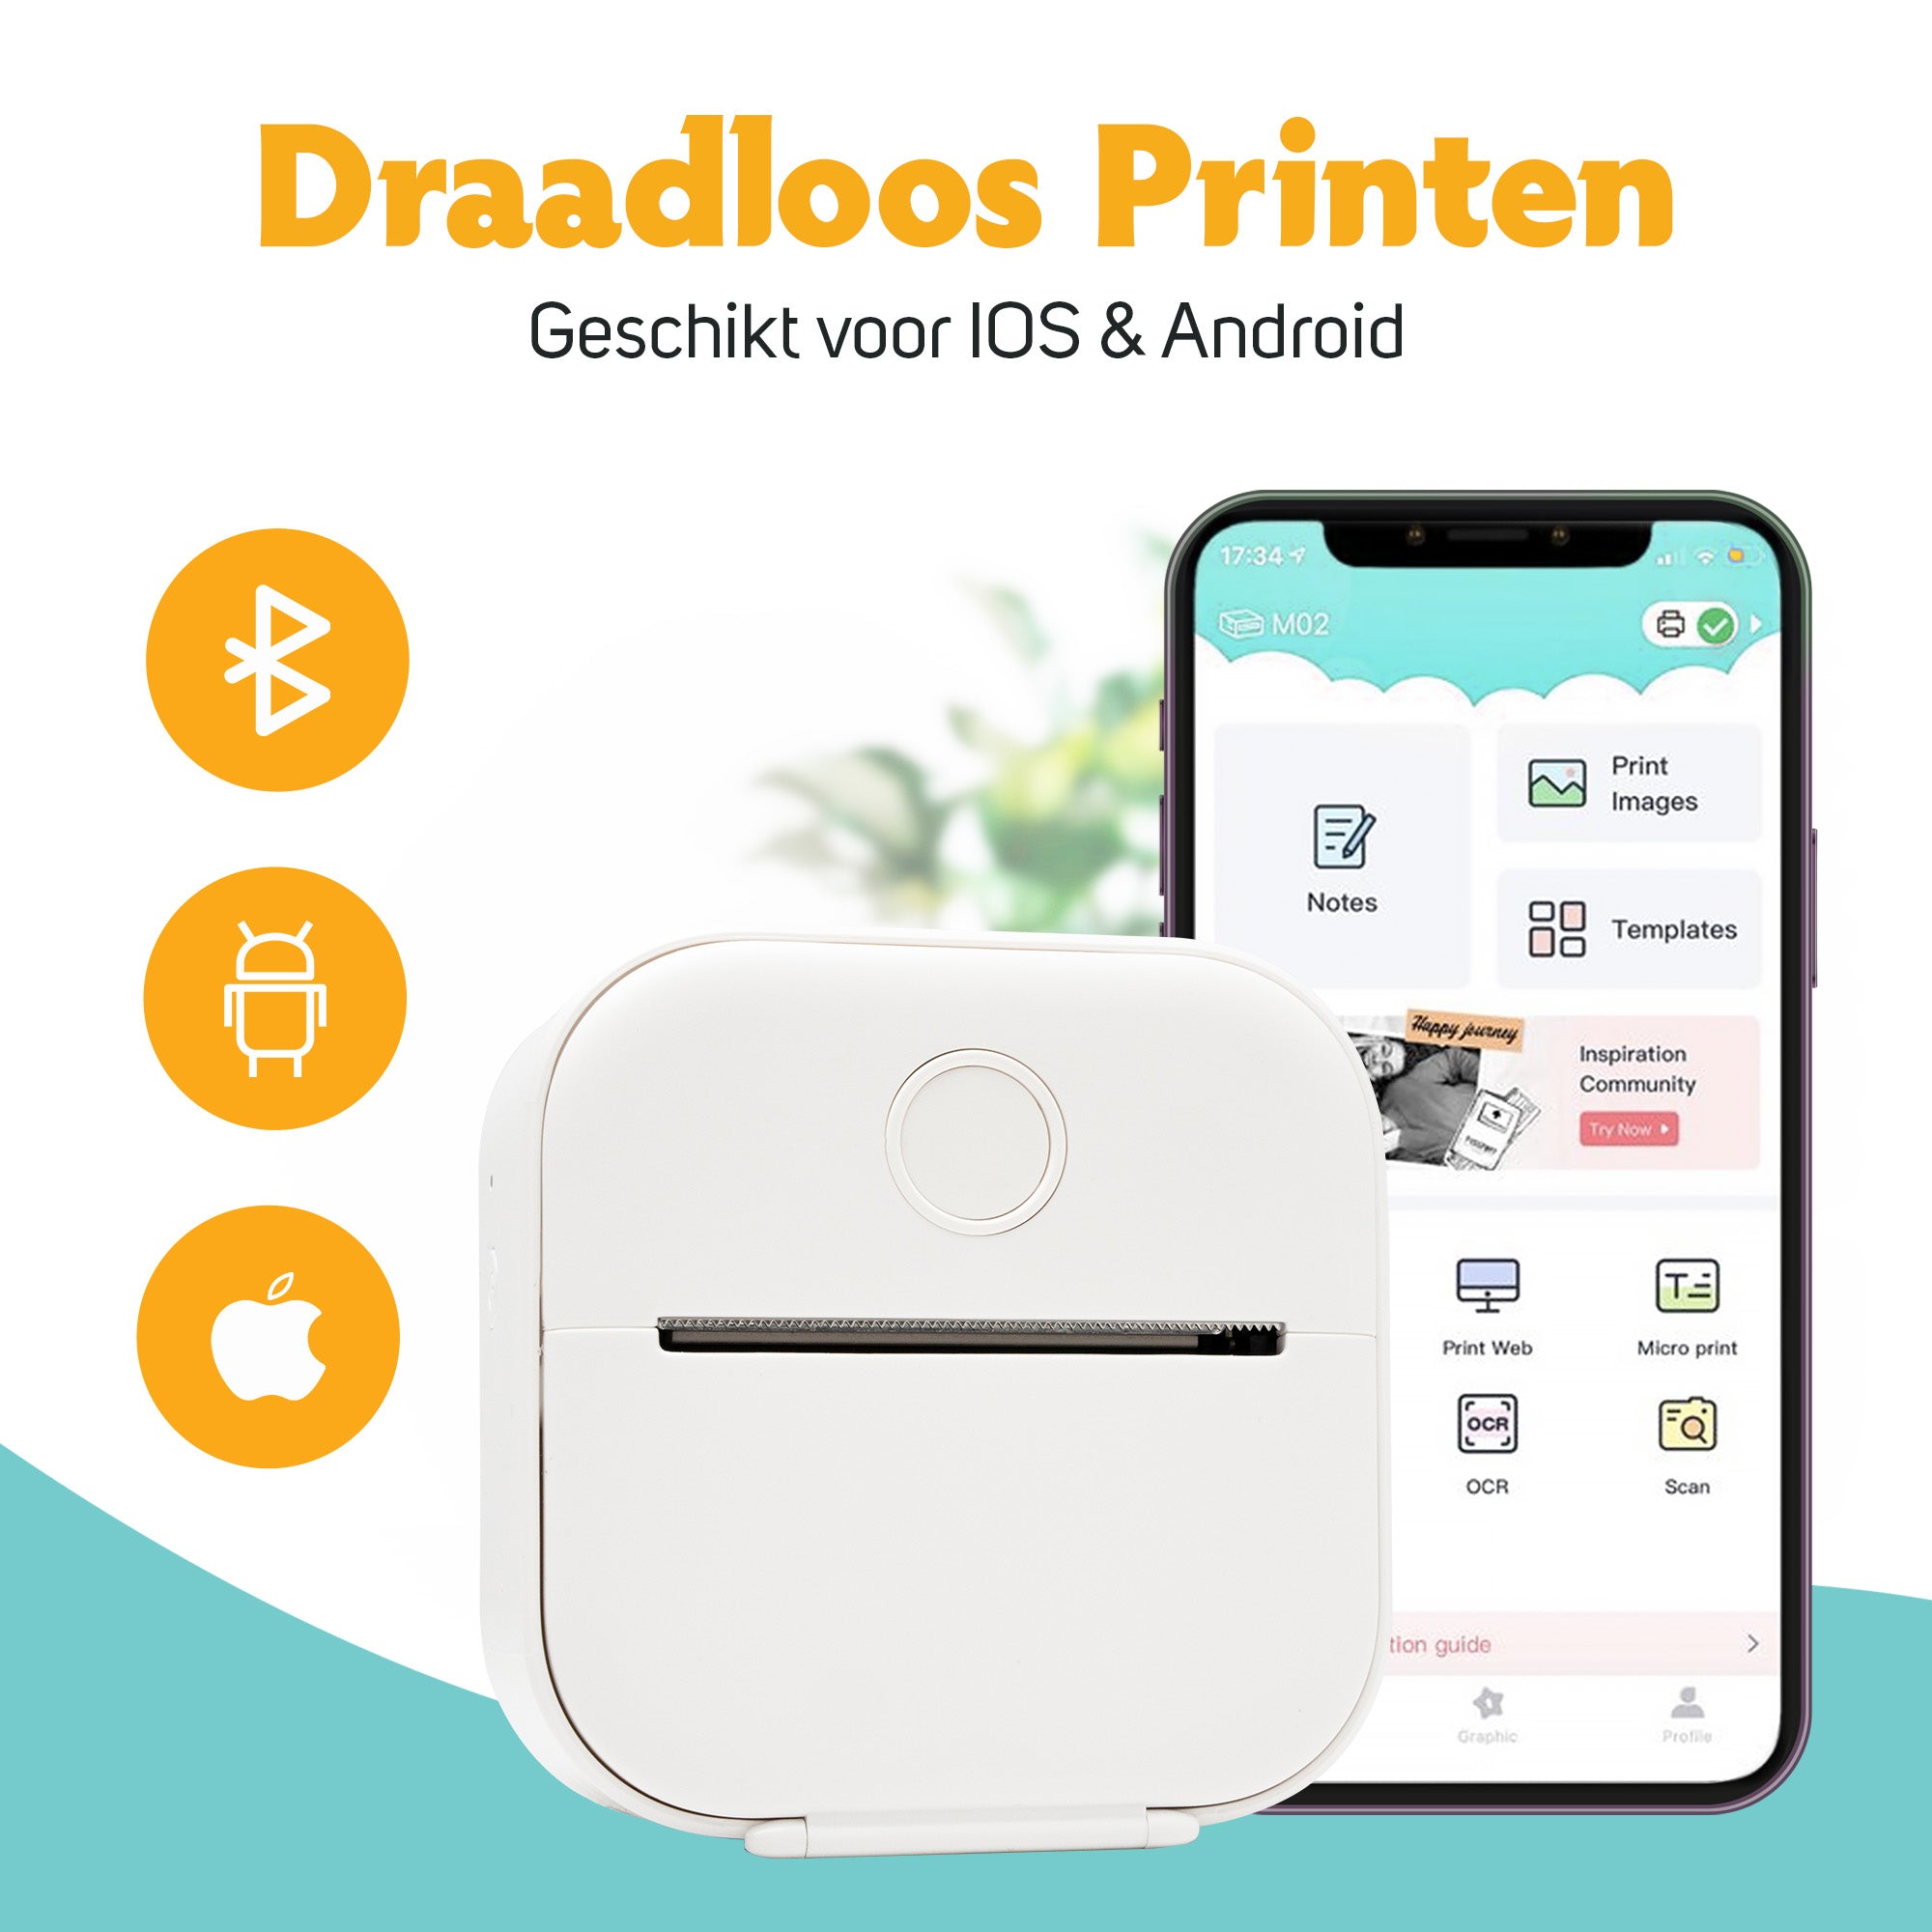 Mini Fotoprinter Voor Smartphone & pocket printer